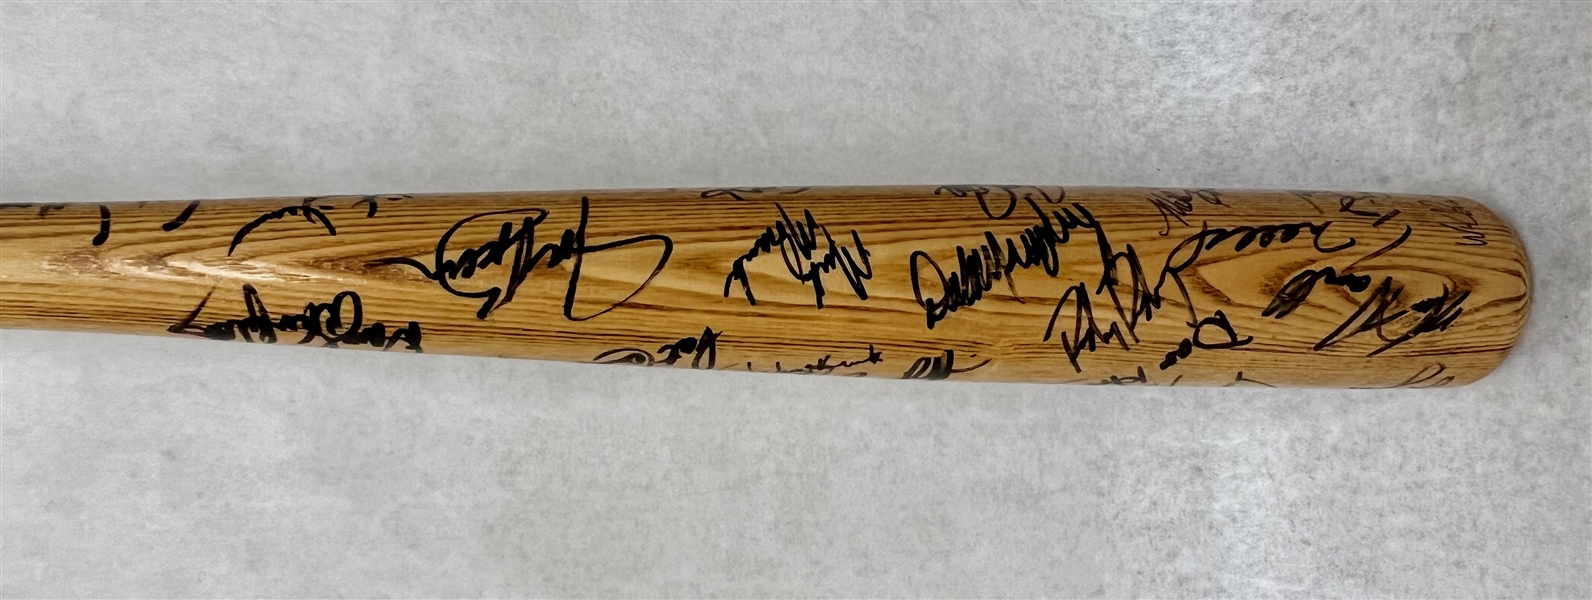 1980s-1990s Multi-Signed Phillies Players Rawlings Pro Bat w. John Kruk & Dale Murphy - 100% of Bid Donated to the Darren Daulton Foundation